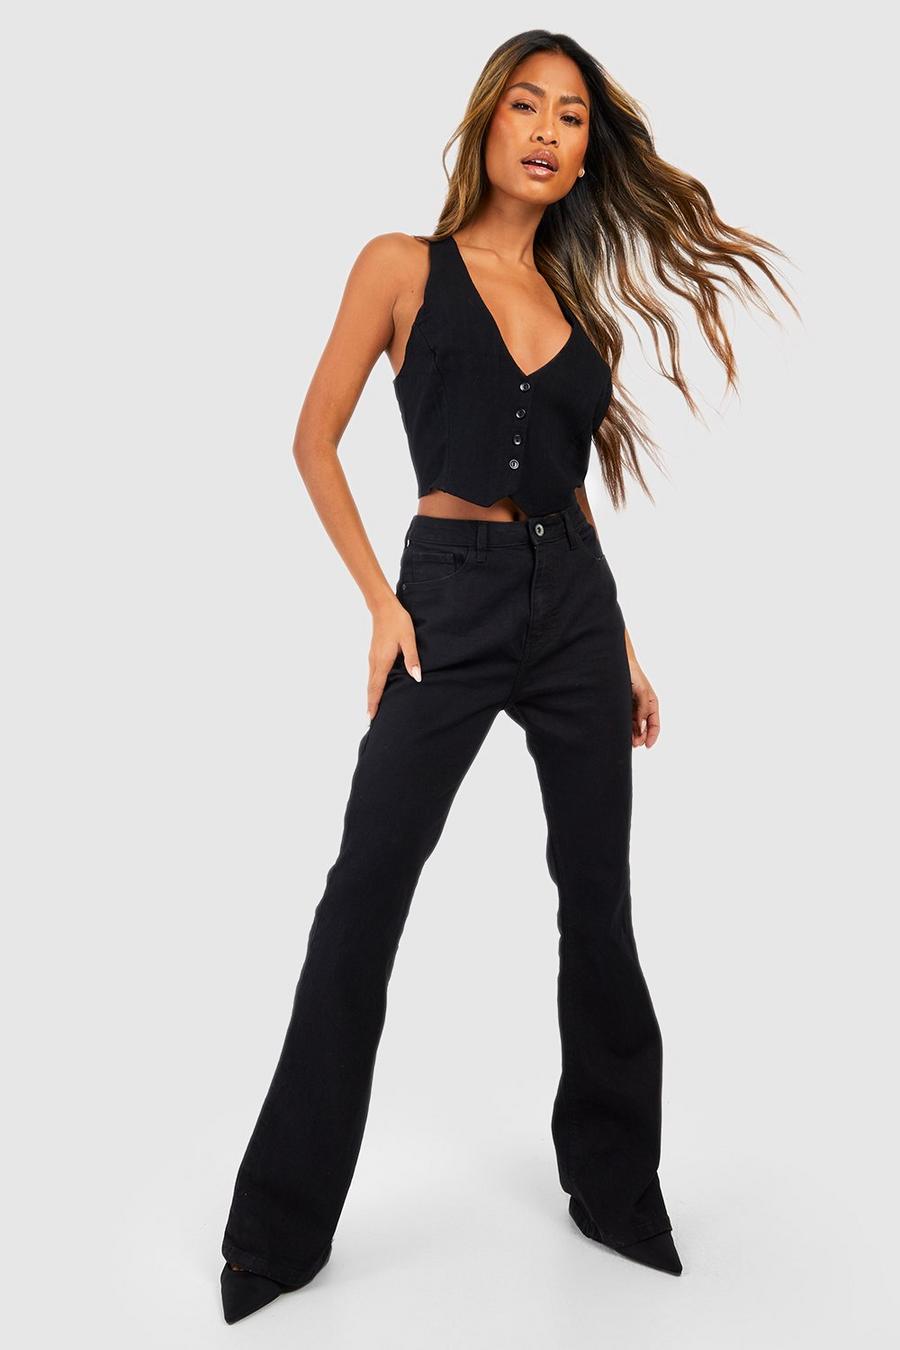 Black nero מכנסי ג'ינס מתרחבים בייסיק high waist עם 5 כיסים